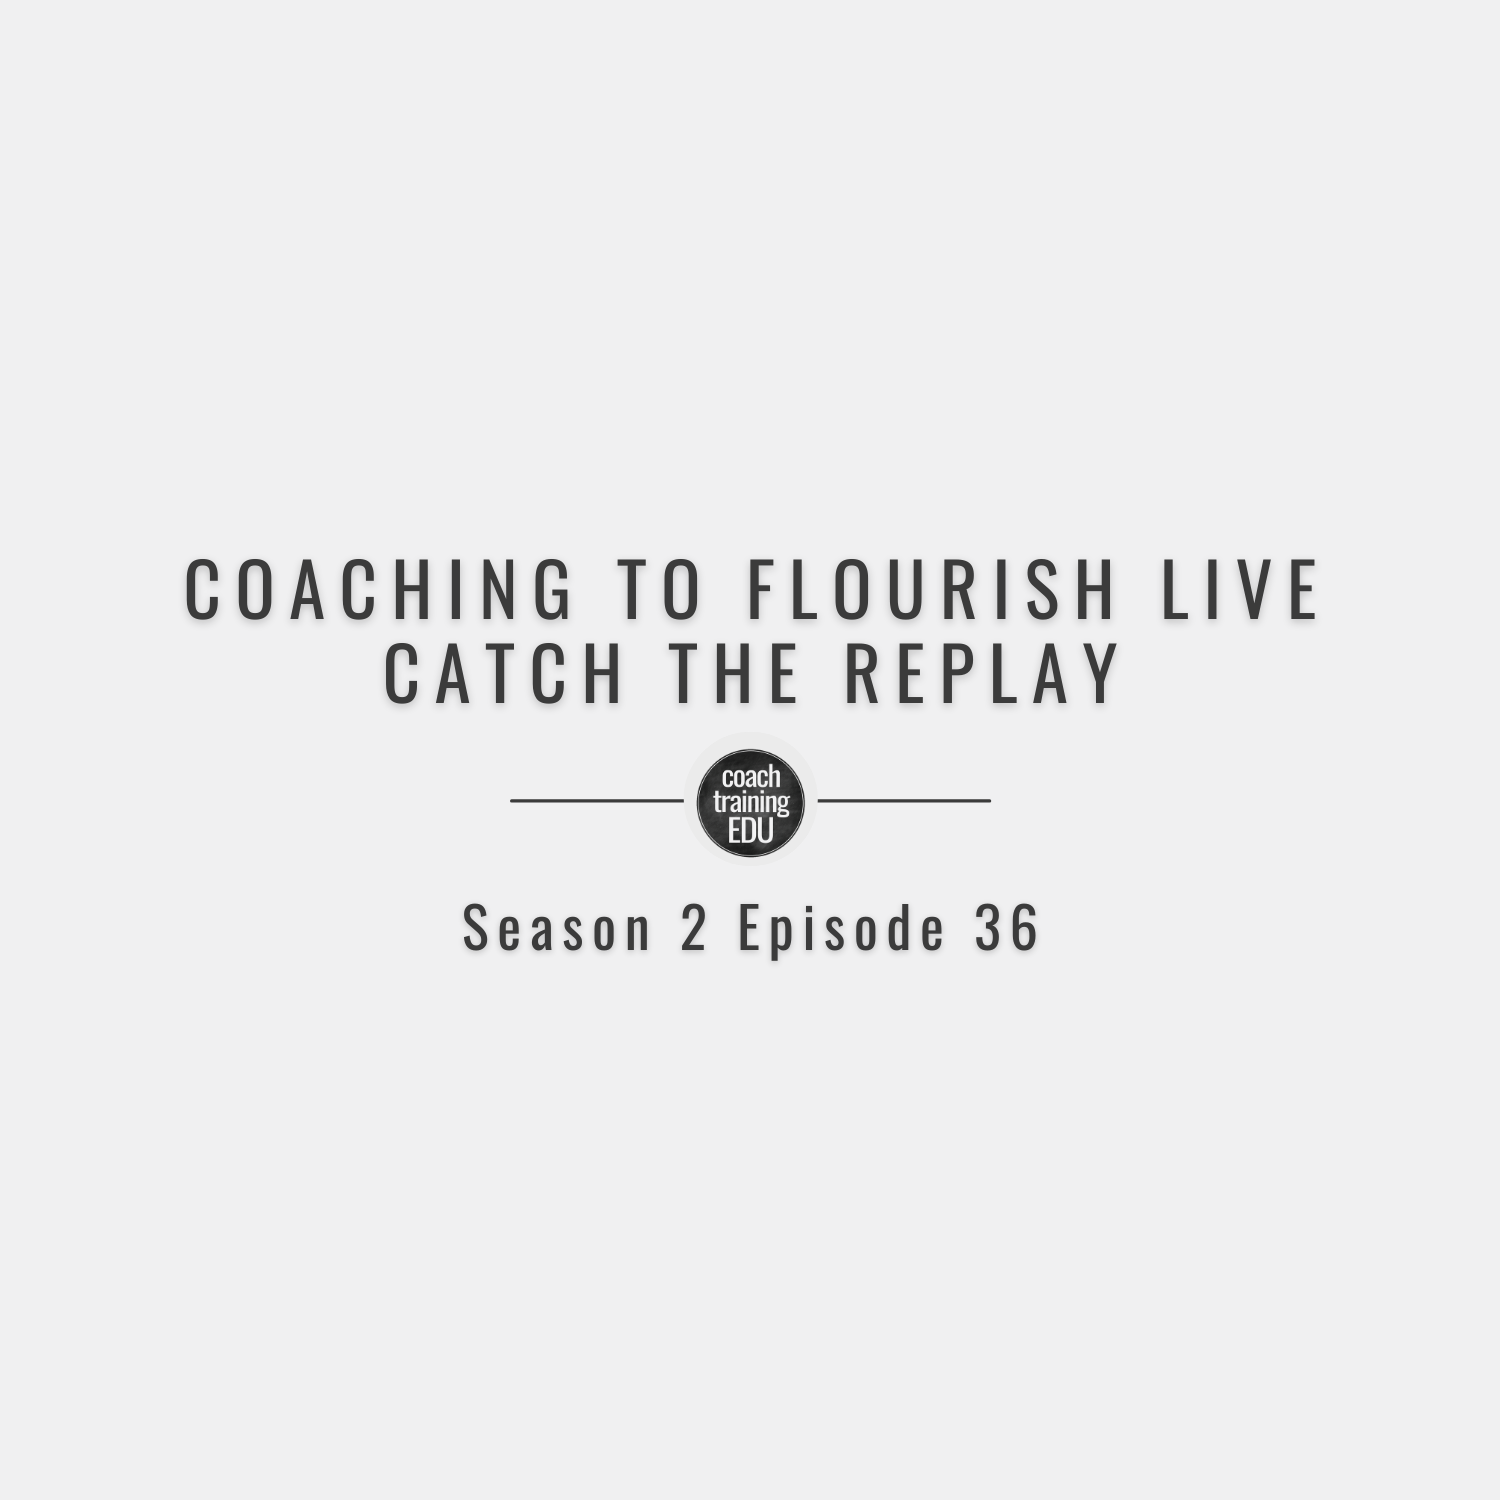 Coaching to Flourish Live Season 2 Episode 36